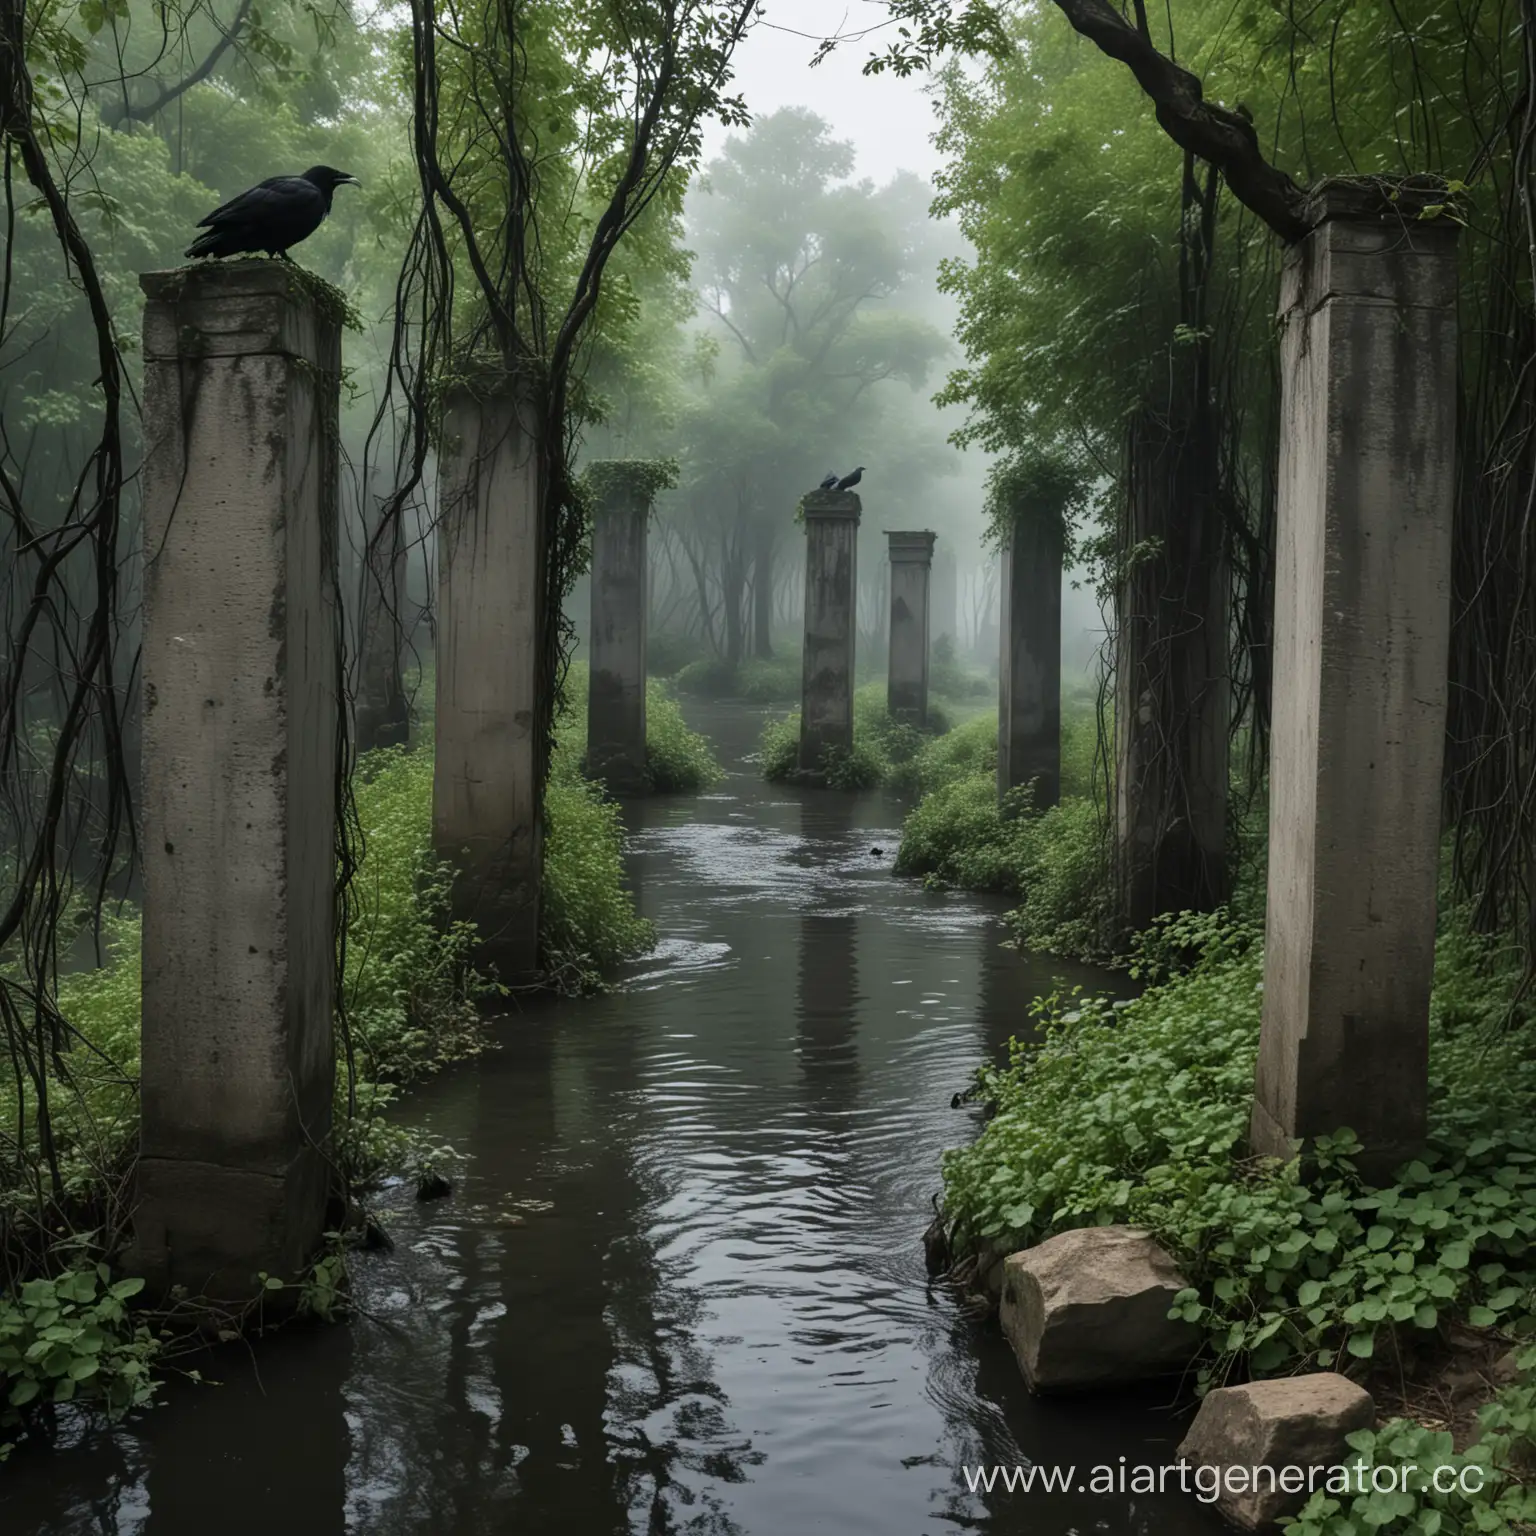 Eerie-Stone-Pillars-Enveloped-in-Vines-by-a-Deep-Black-River